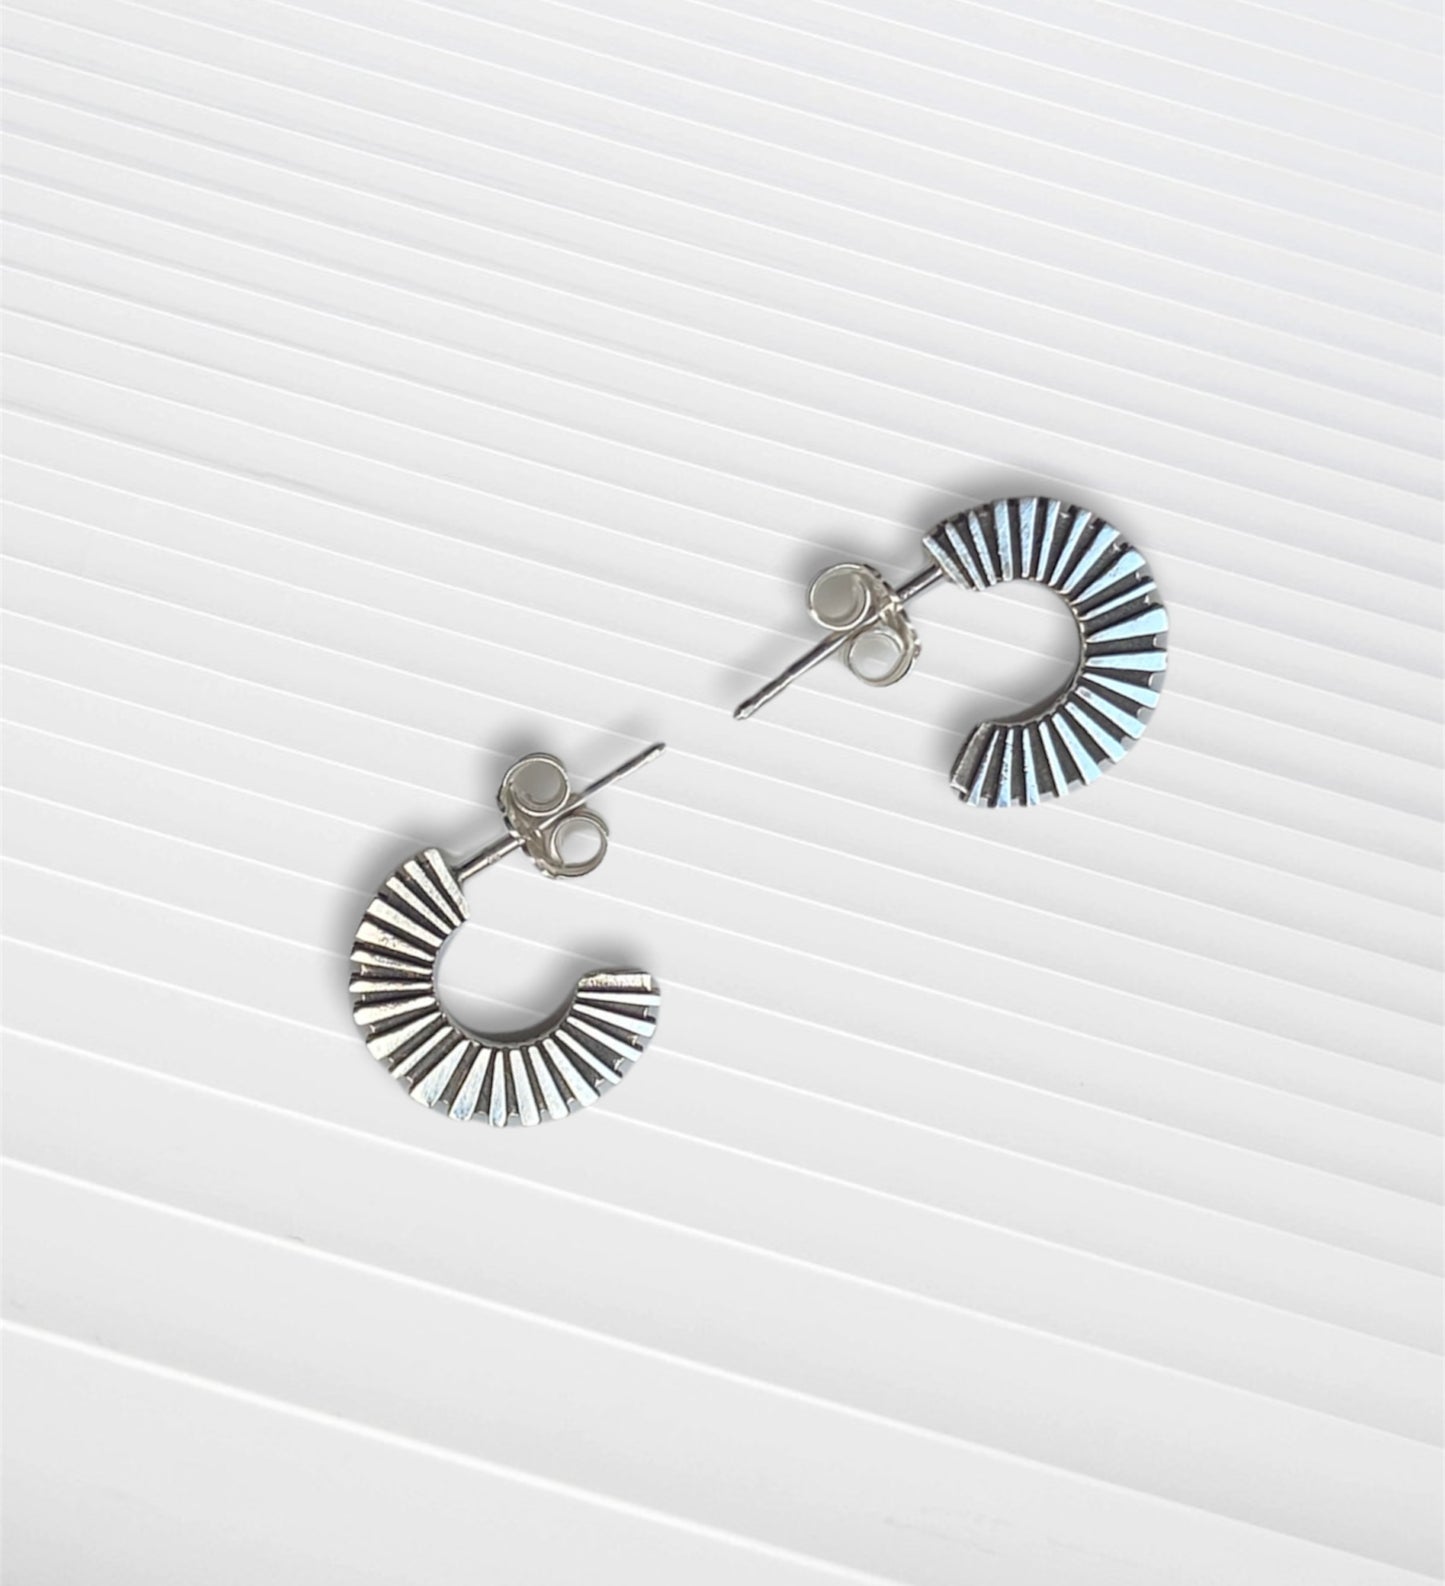 Bandoneon small hoop earrings